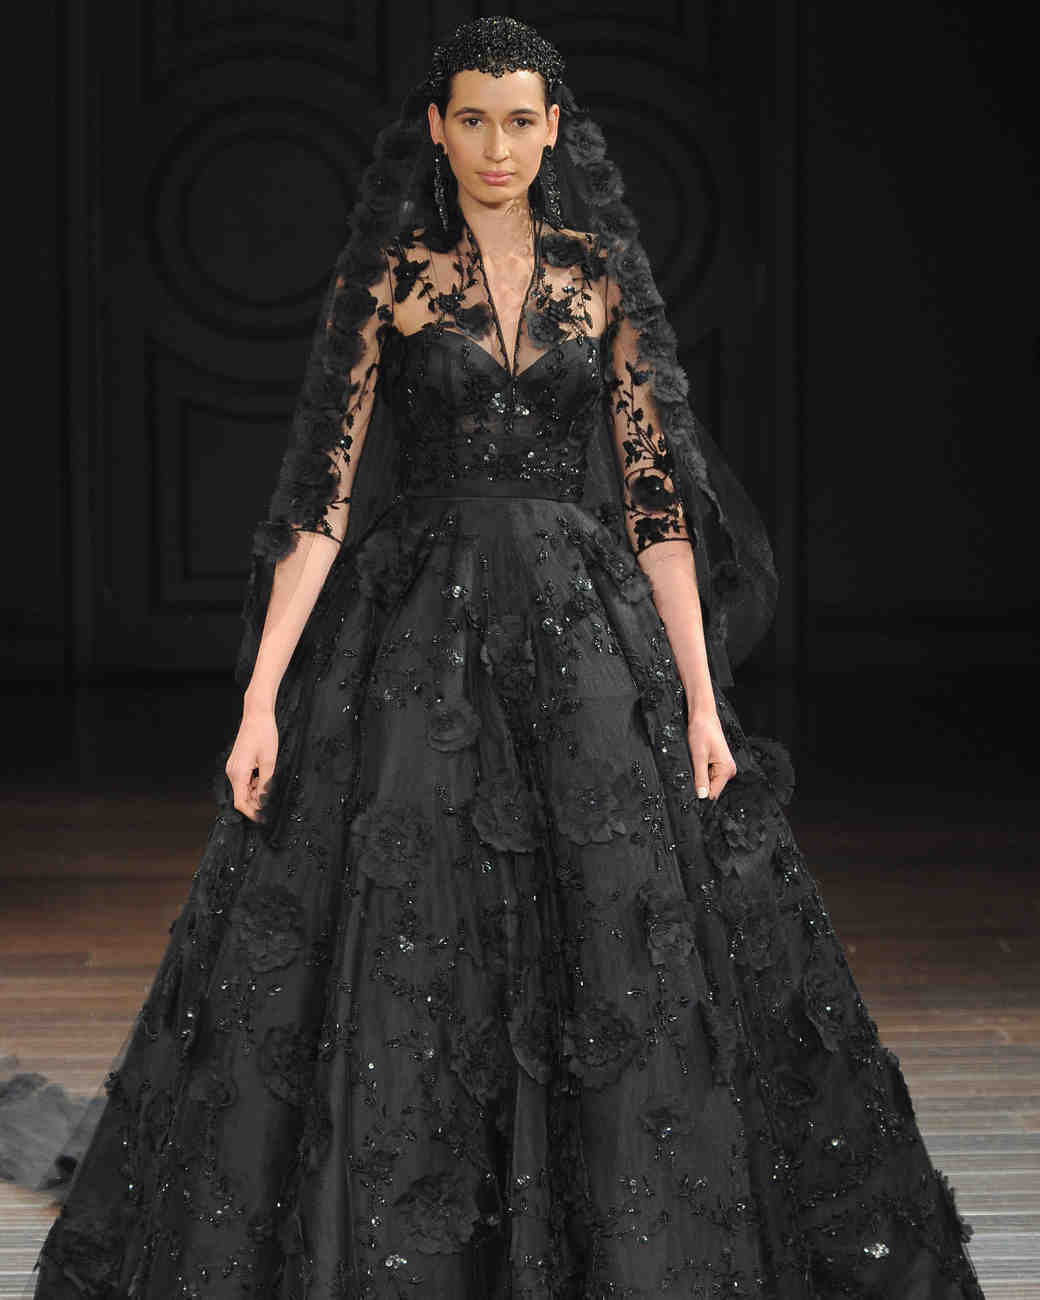 Chic Black Wedding Dress for the Edgy Bride | Martha ...